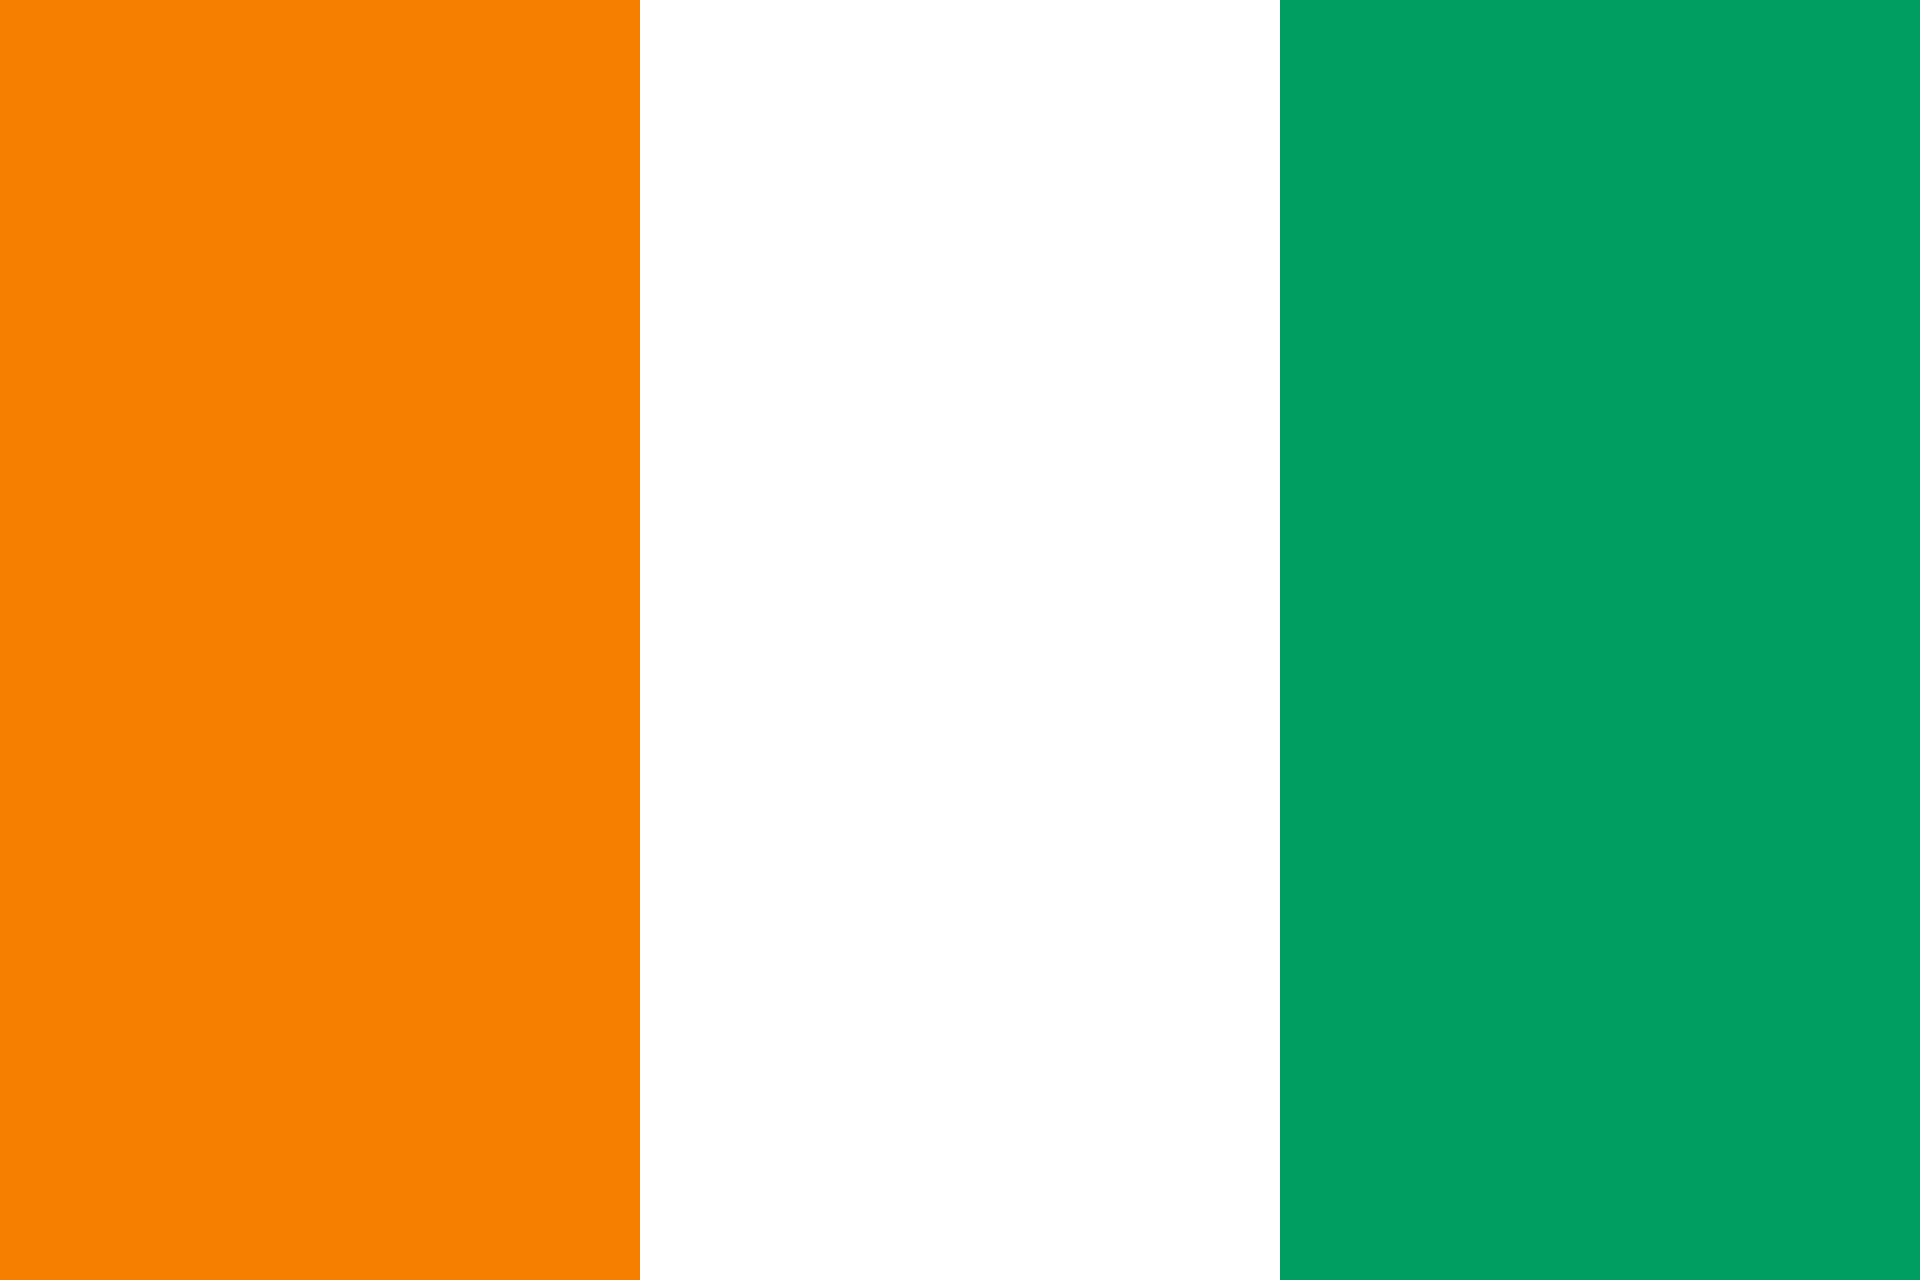 High Quality Ivory Coast Flag OR Upside Down Irish Flag Blank Meme Template